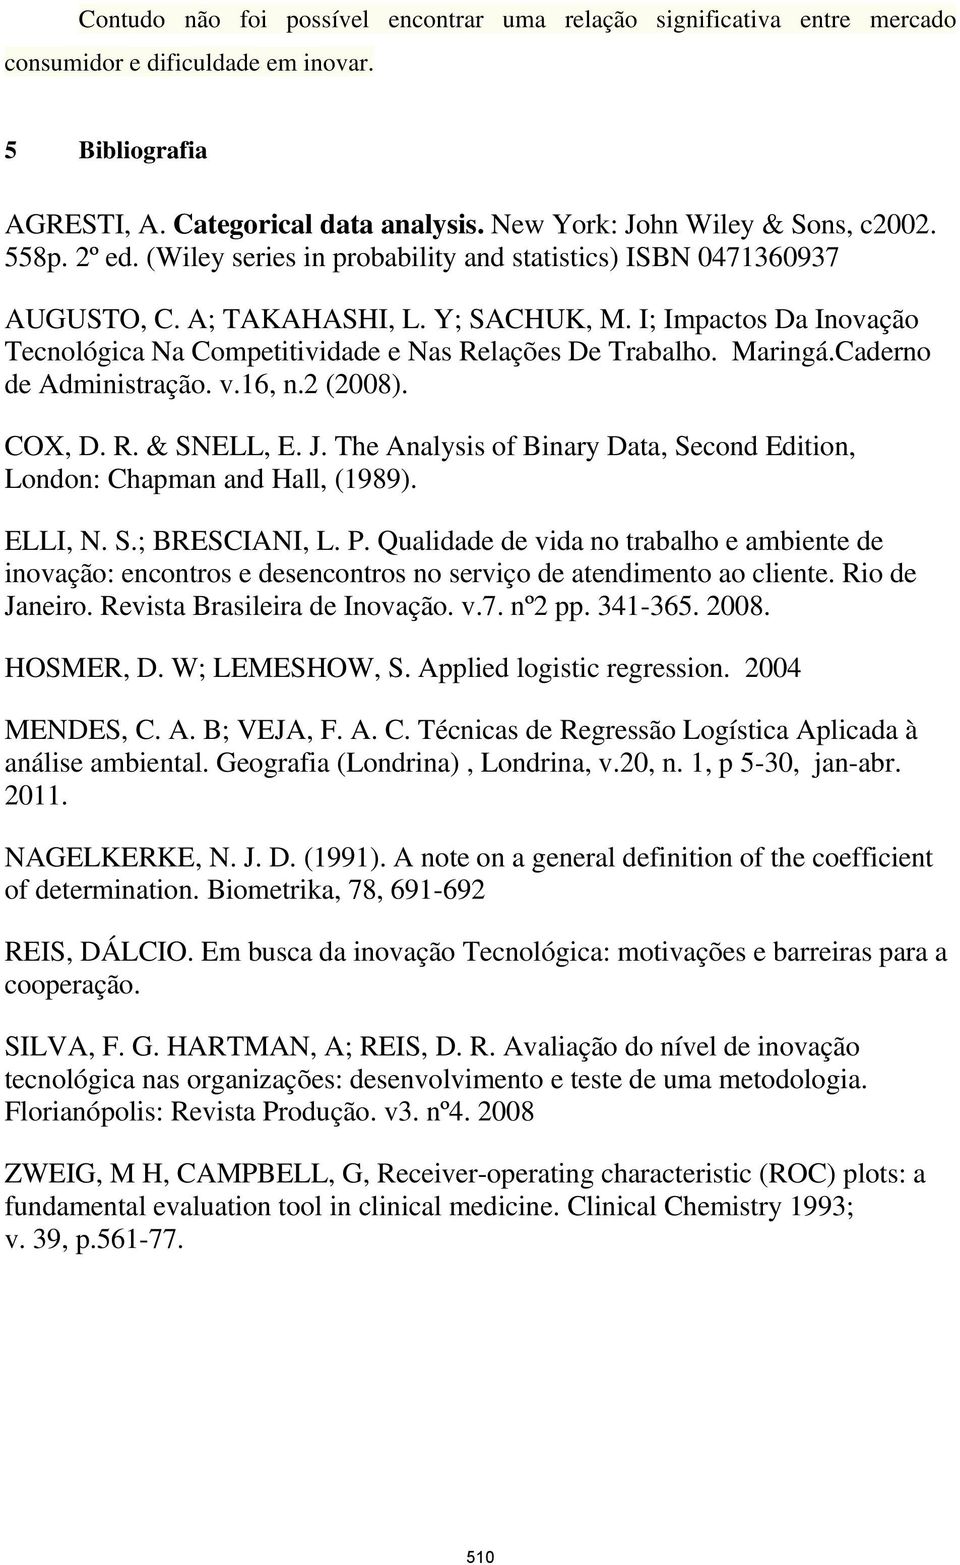 Maringá.Caderno de Administração. v.16, n.2 (2008). COX, D. R. & SNELL, E. J. The Analysis of Binary Data, Second Edition, London: Chapman and Hall, (1989). ELLI, N. S.; BRESCIANI, L. P.